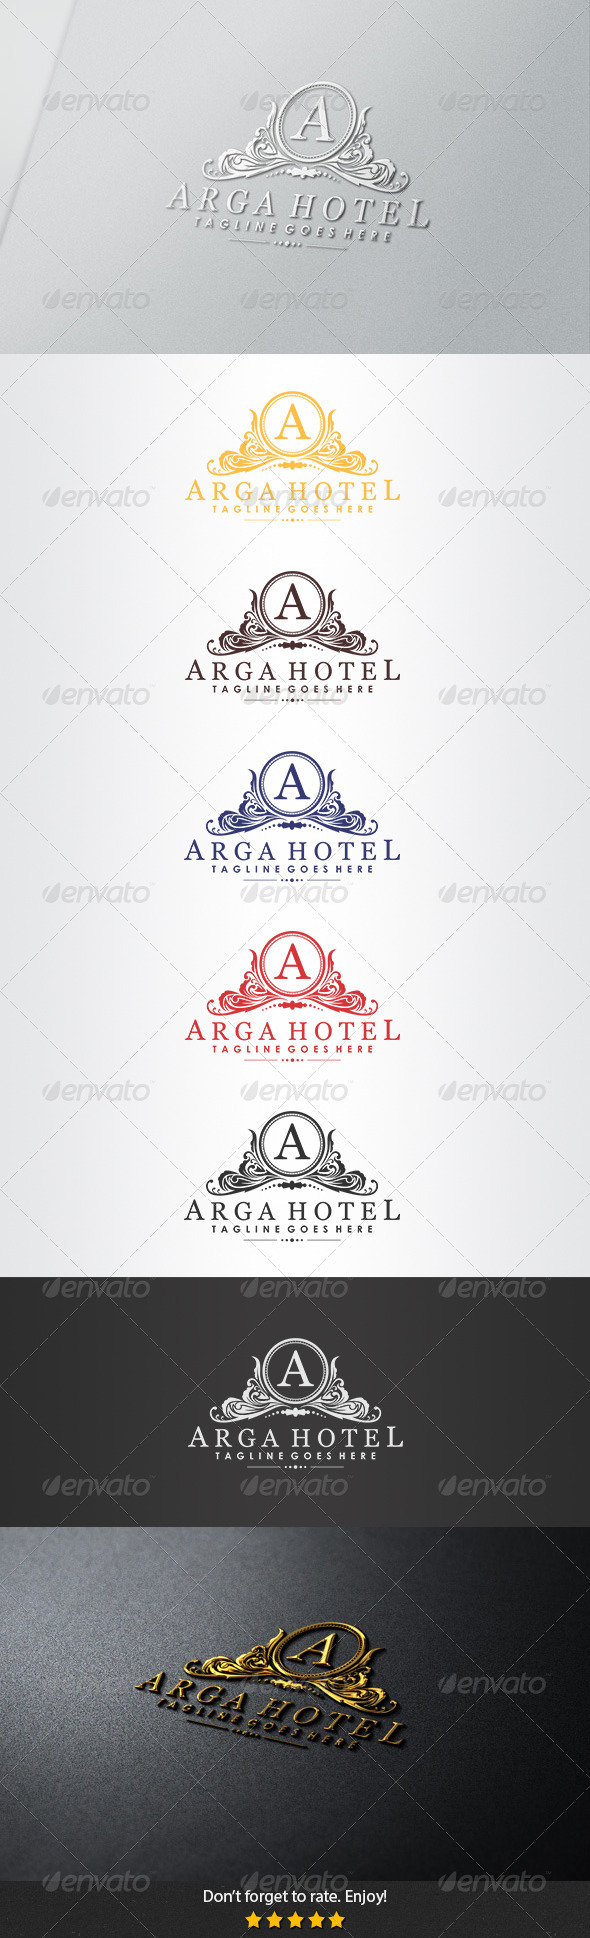 Arga Hotel Logo